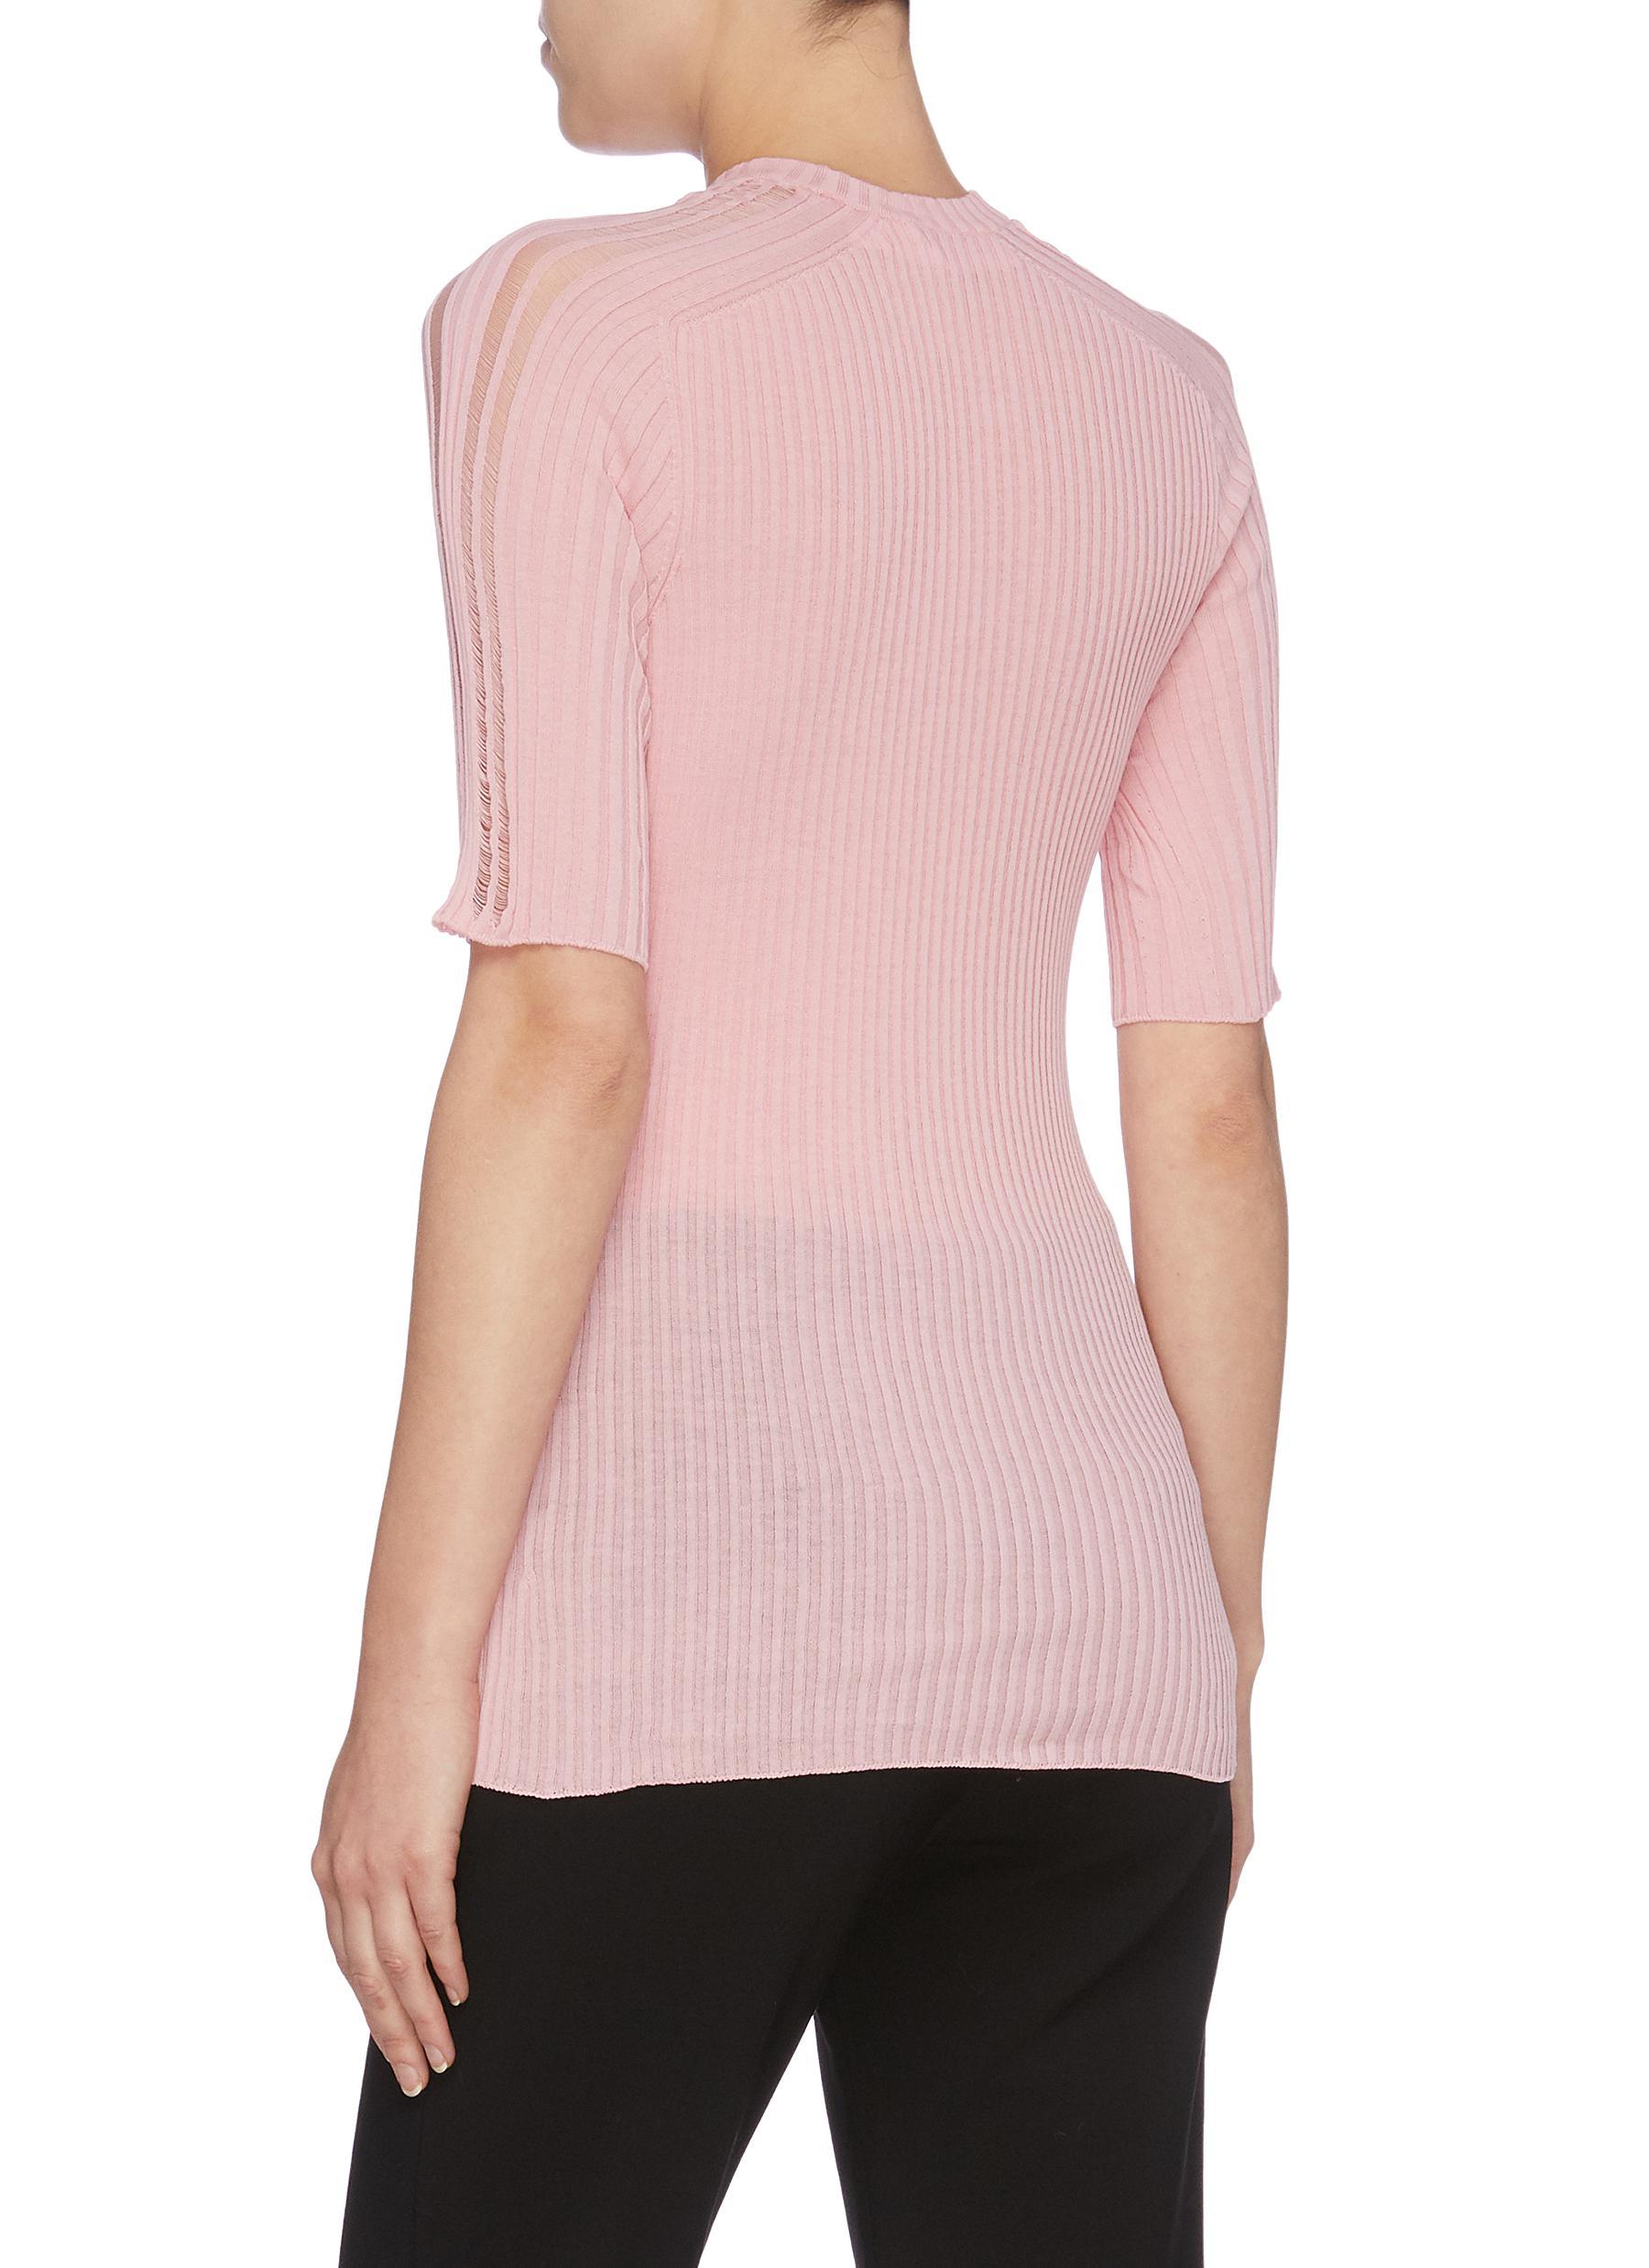 Victoria Beckham Cotton Rib Knit Short Sleeve Top in Pink - Lyst